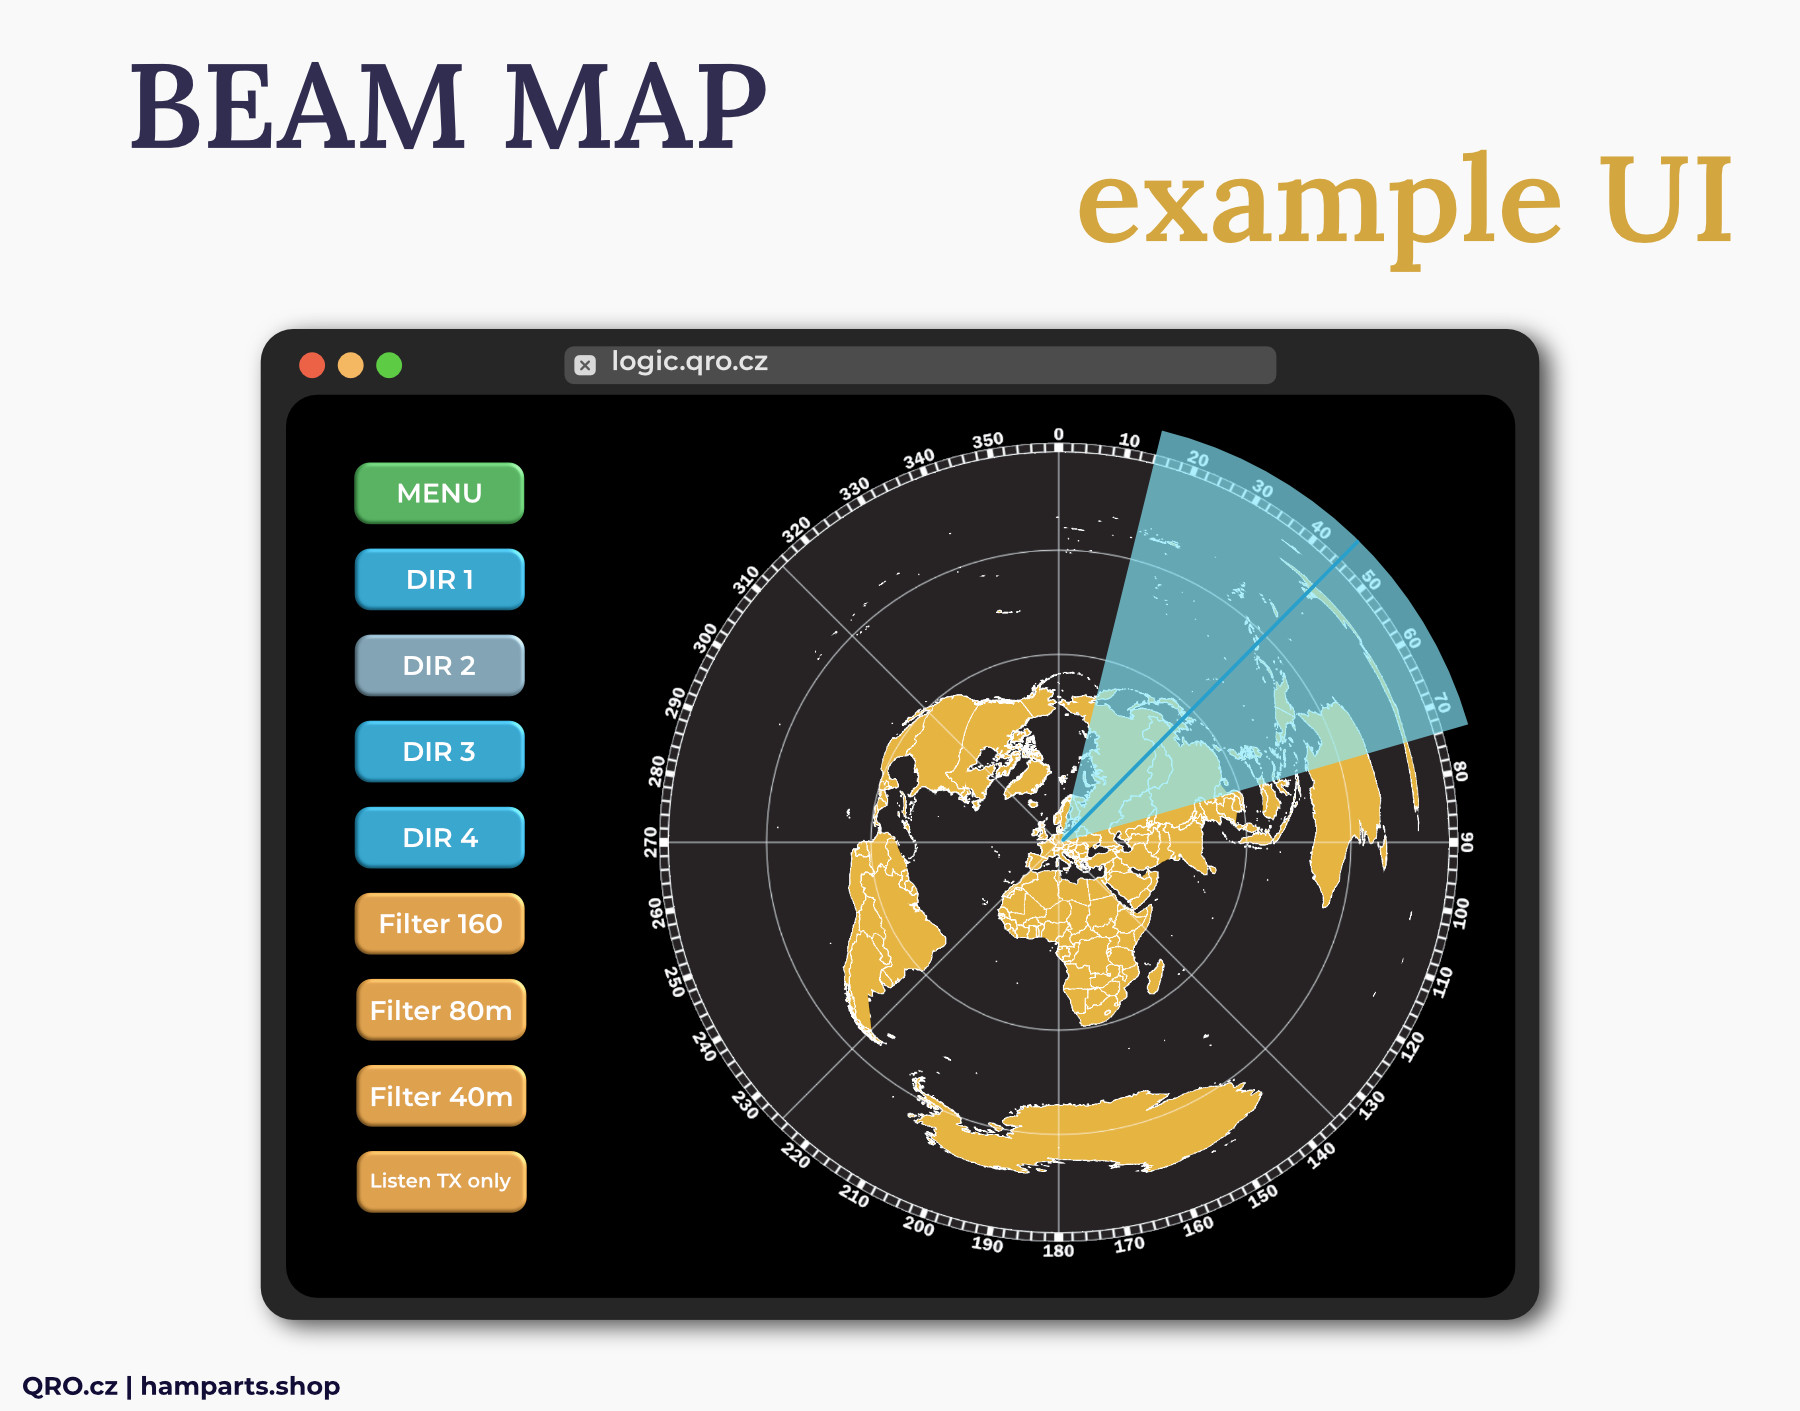 ui example beam map qro.cz hamparts.shop